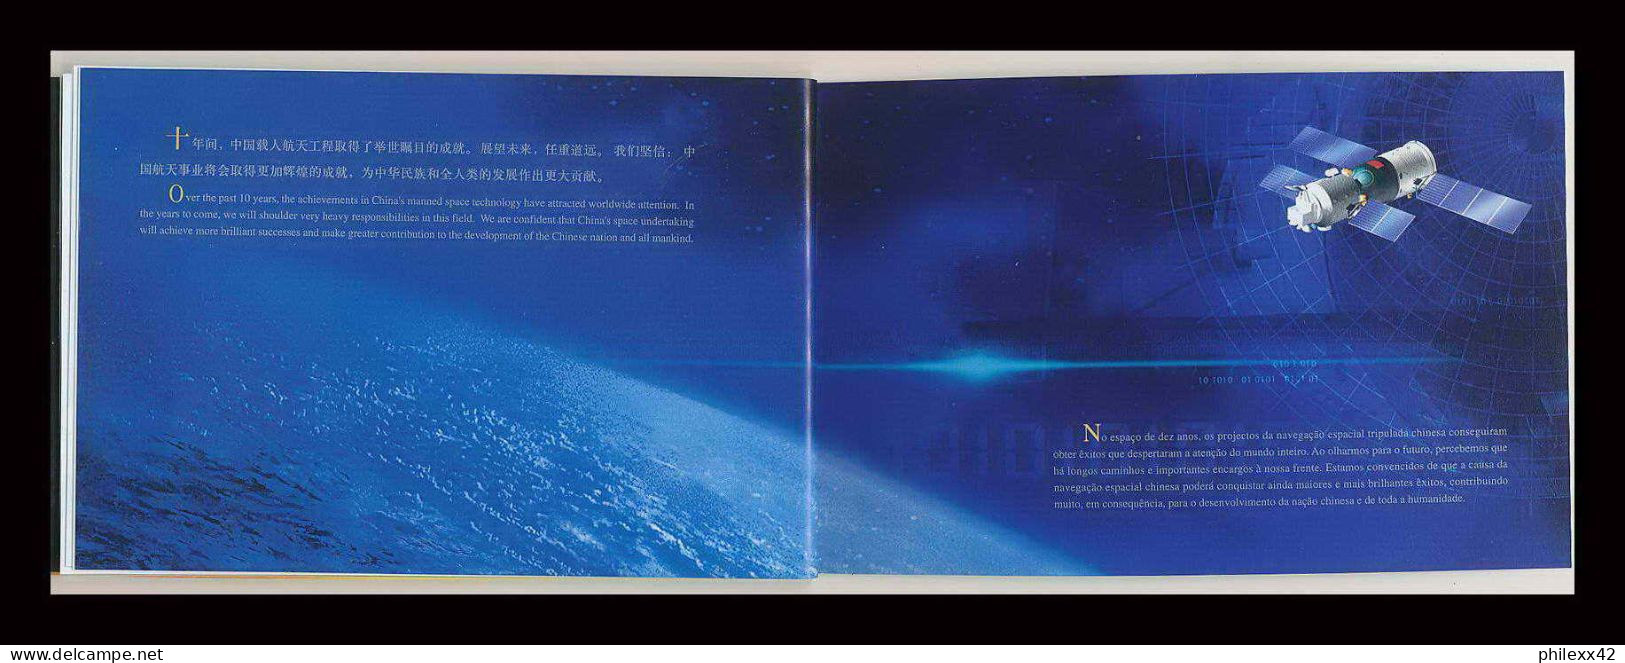 2339/ Espace (space) neuf ** MNH Chine (china)/hong kong / macau Taikonaute chinois, carnet 2003